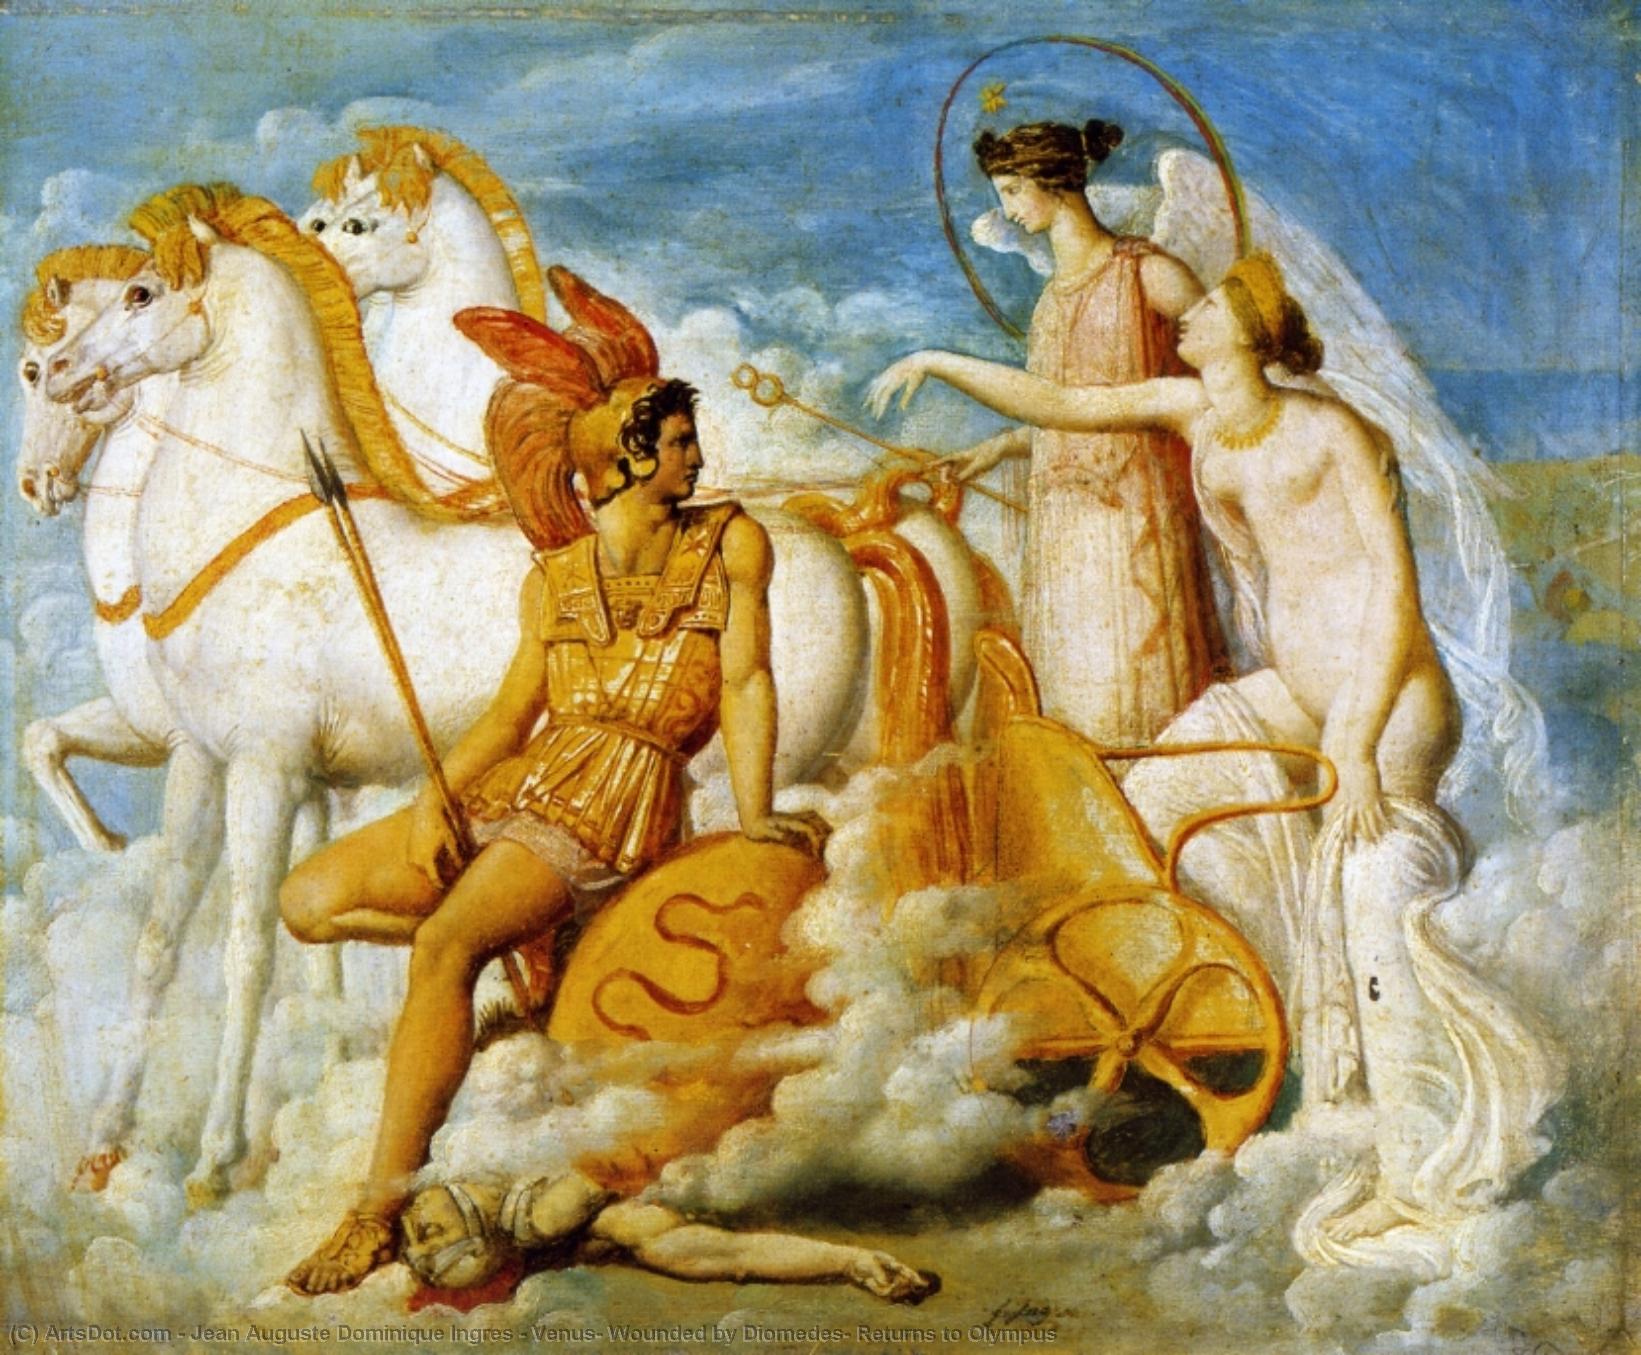 WikiOO.org - Εγκυκλοπαίδεια Καλών Τεχνών - Ζωγραφική, έργα τέχνης Jean Auguste Dominique Ingres - Venus, Wounded by Diomedes, Returns to Olympus